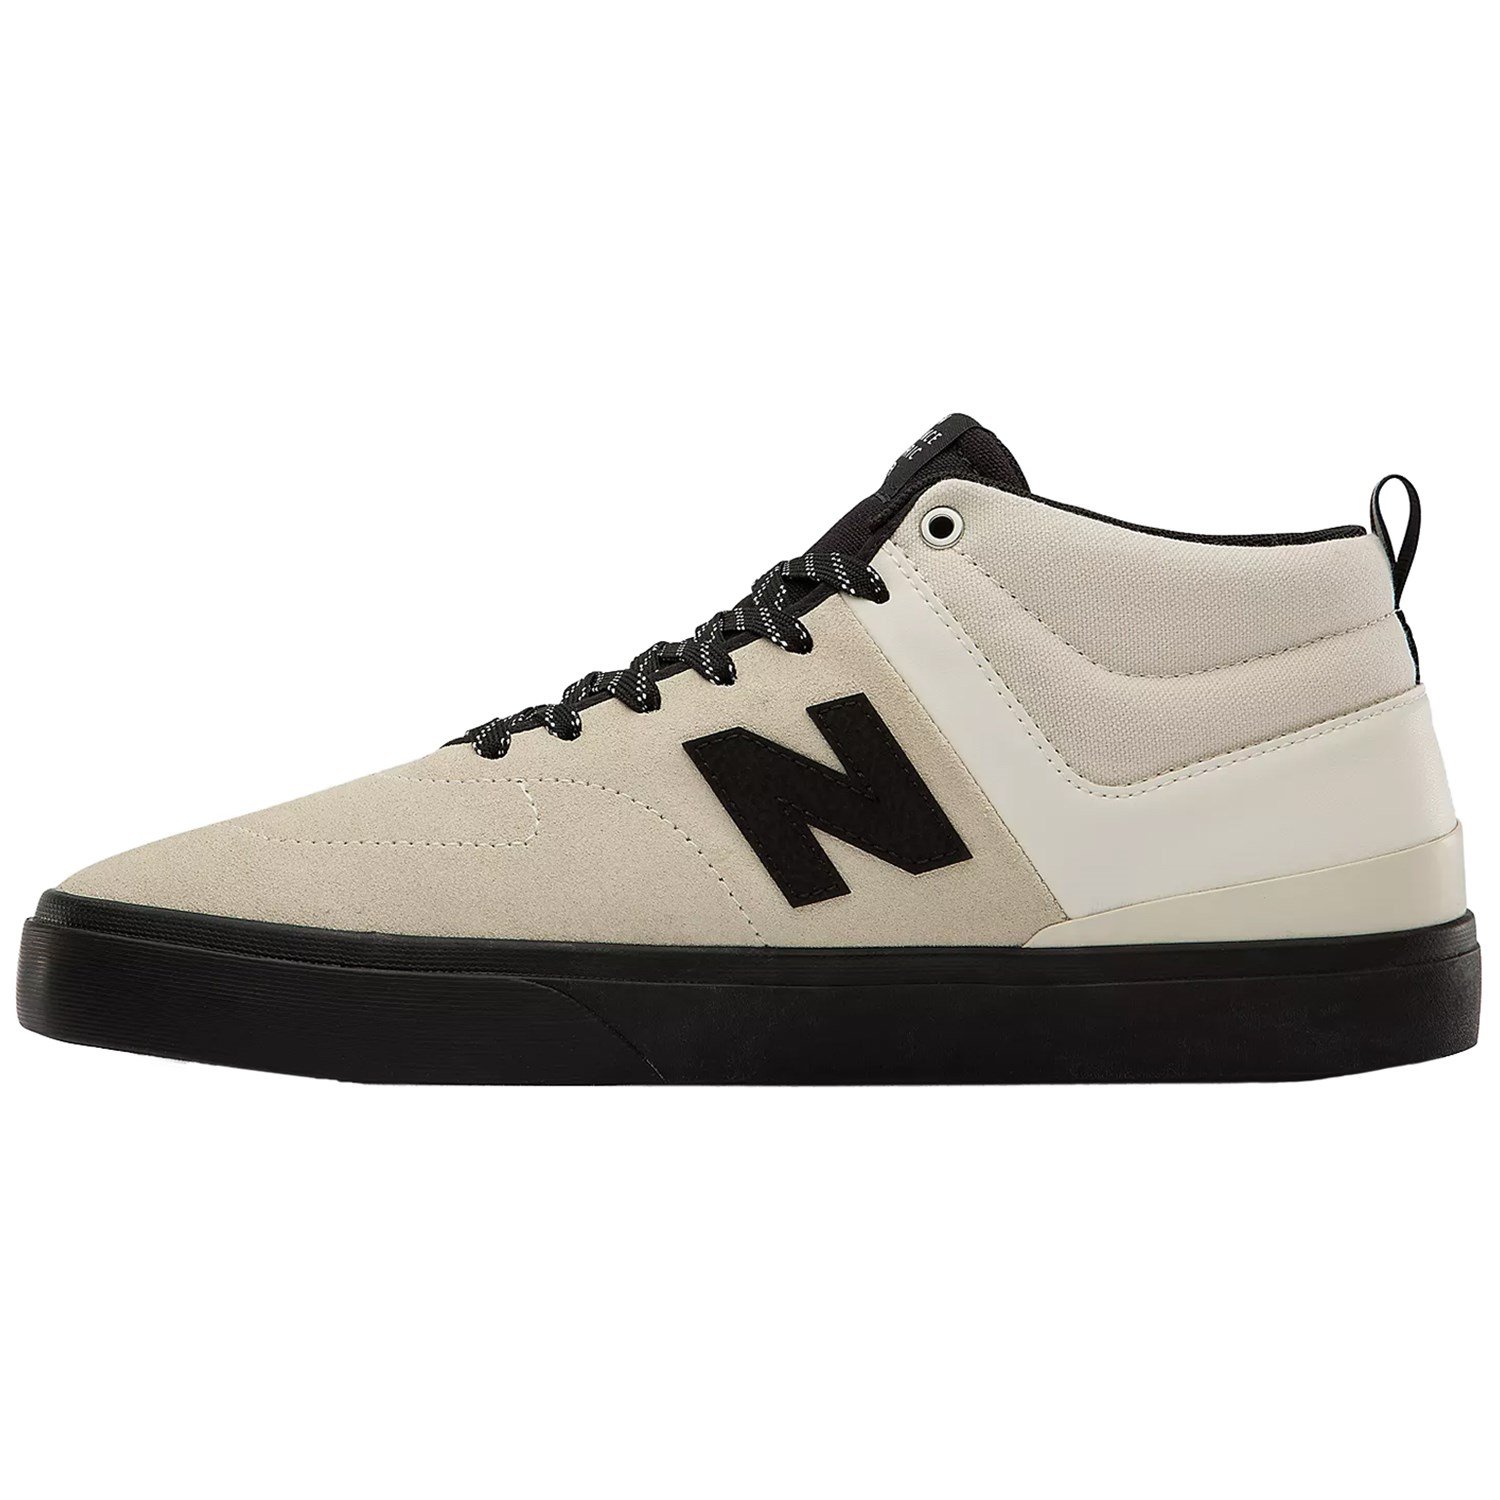 New Balance Numeric 379 Mid Shoes